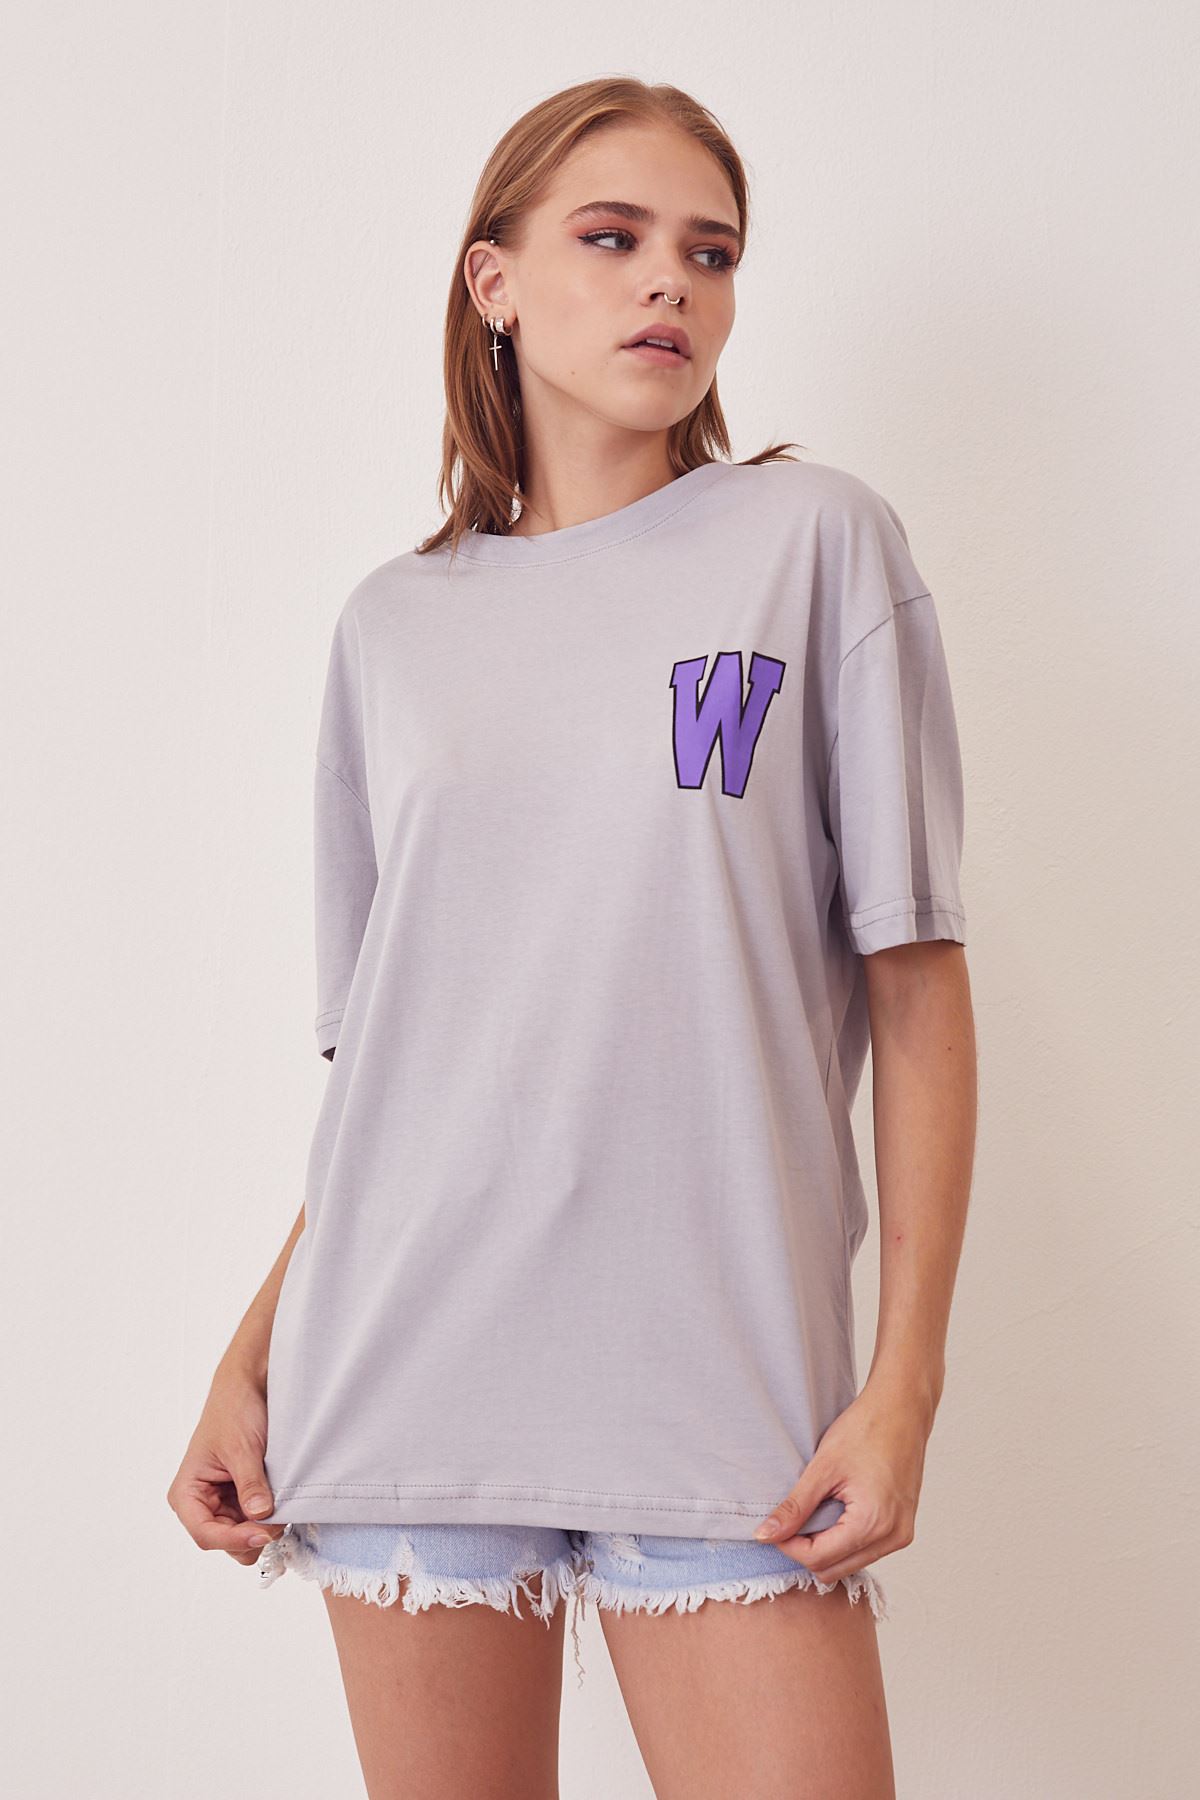 W Baskılı T-shirt-Gri